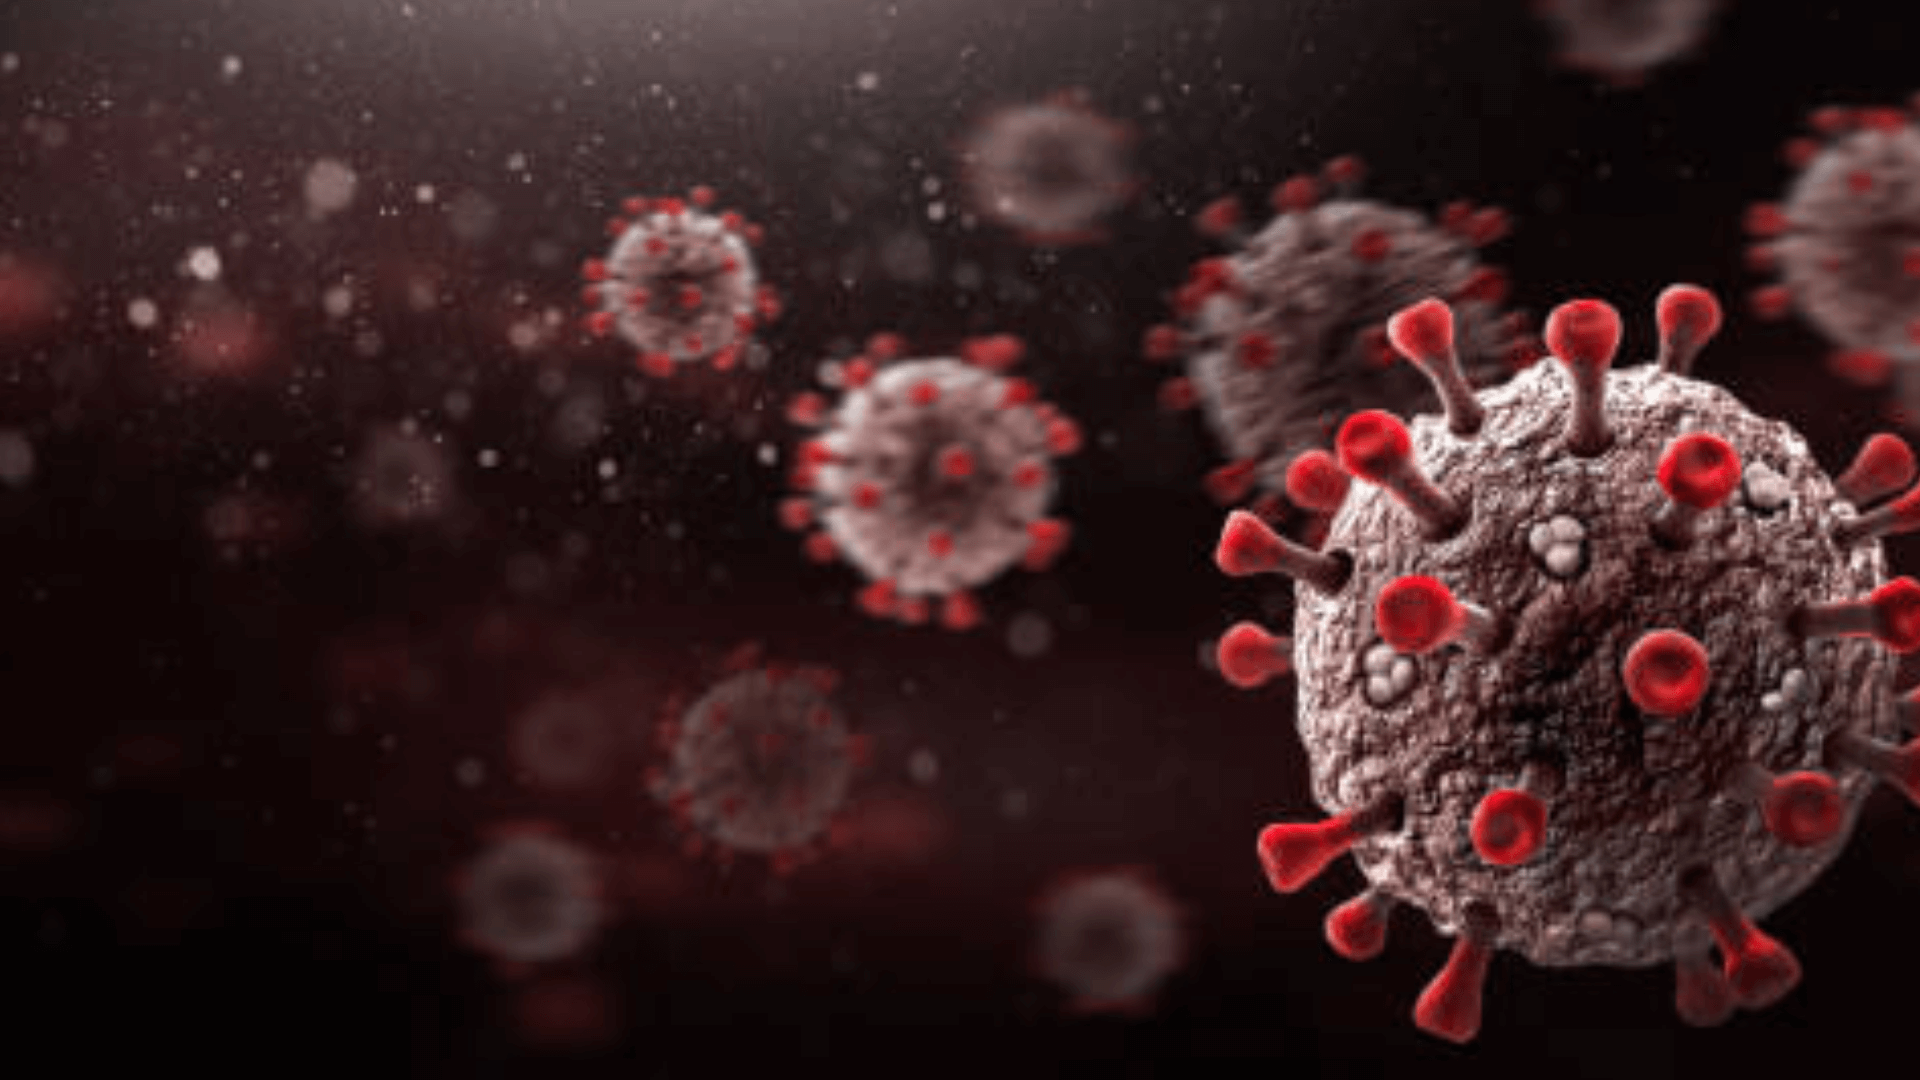 Fetal-Infection-Is-An-Unlikely-Scenario-With-Coronavirus